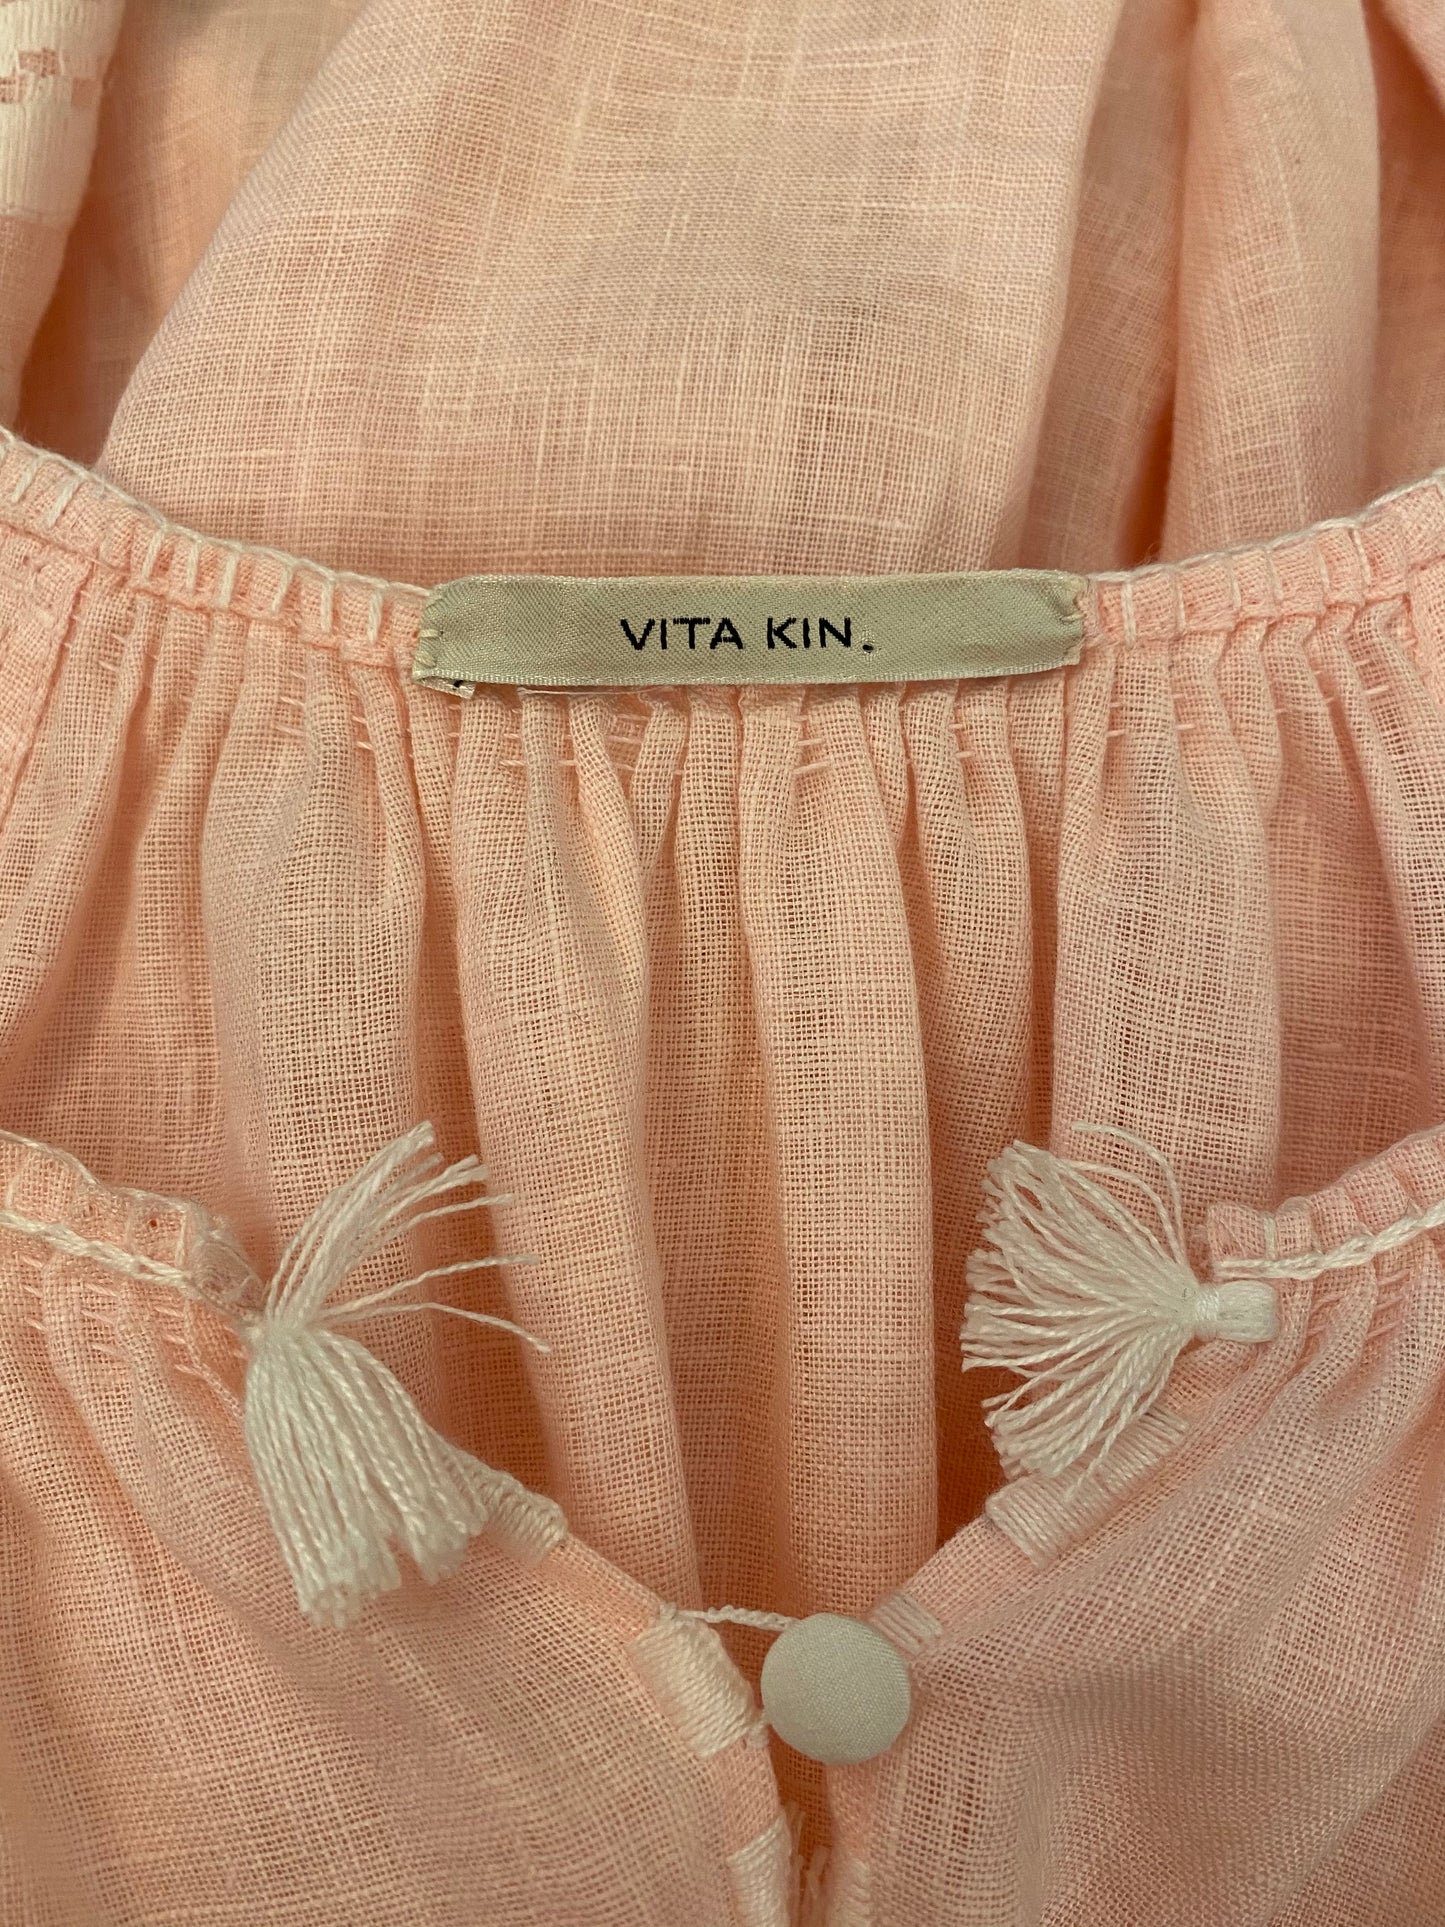 VITA KIN Pink Linen Dress Size S